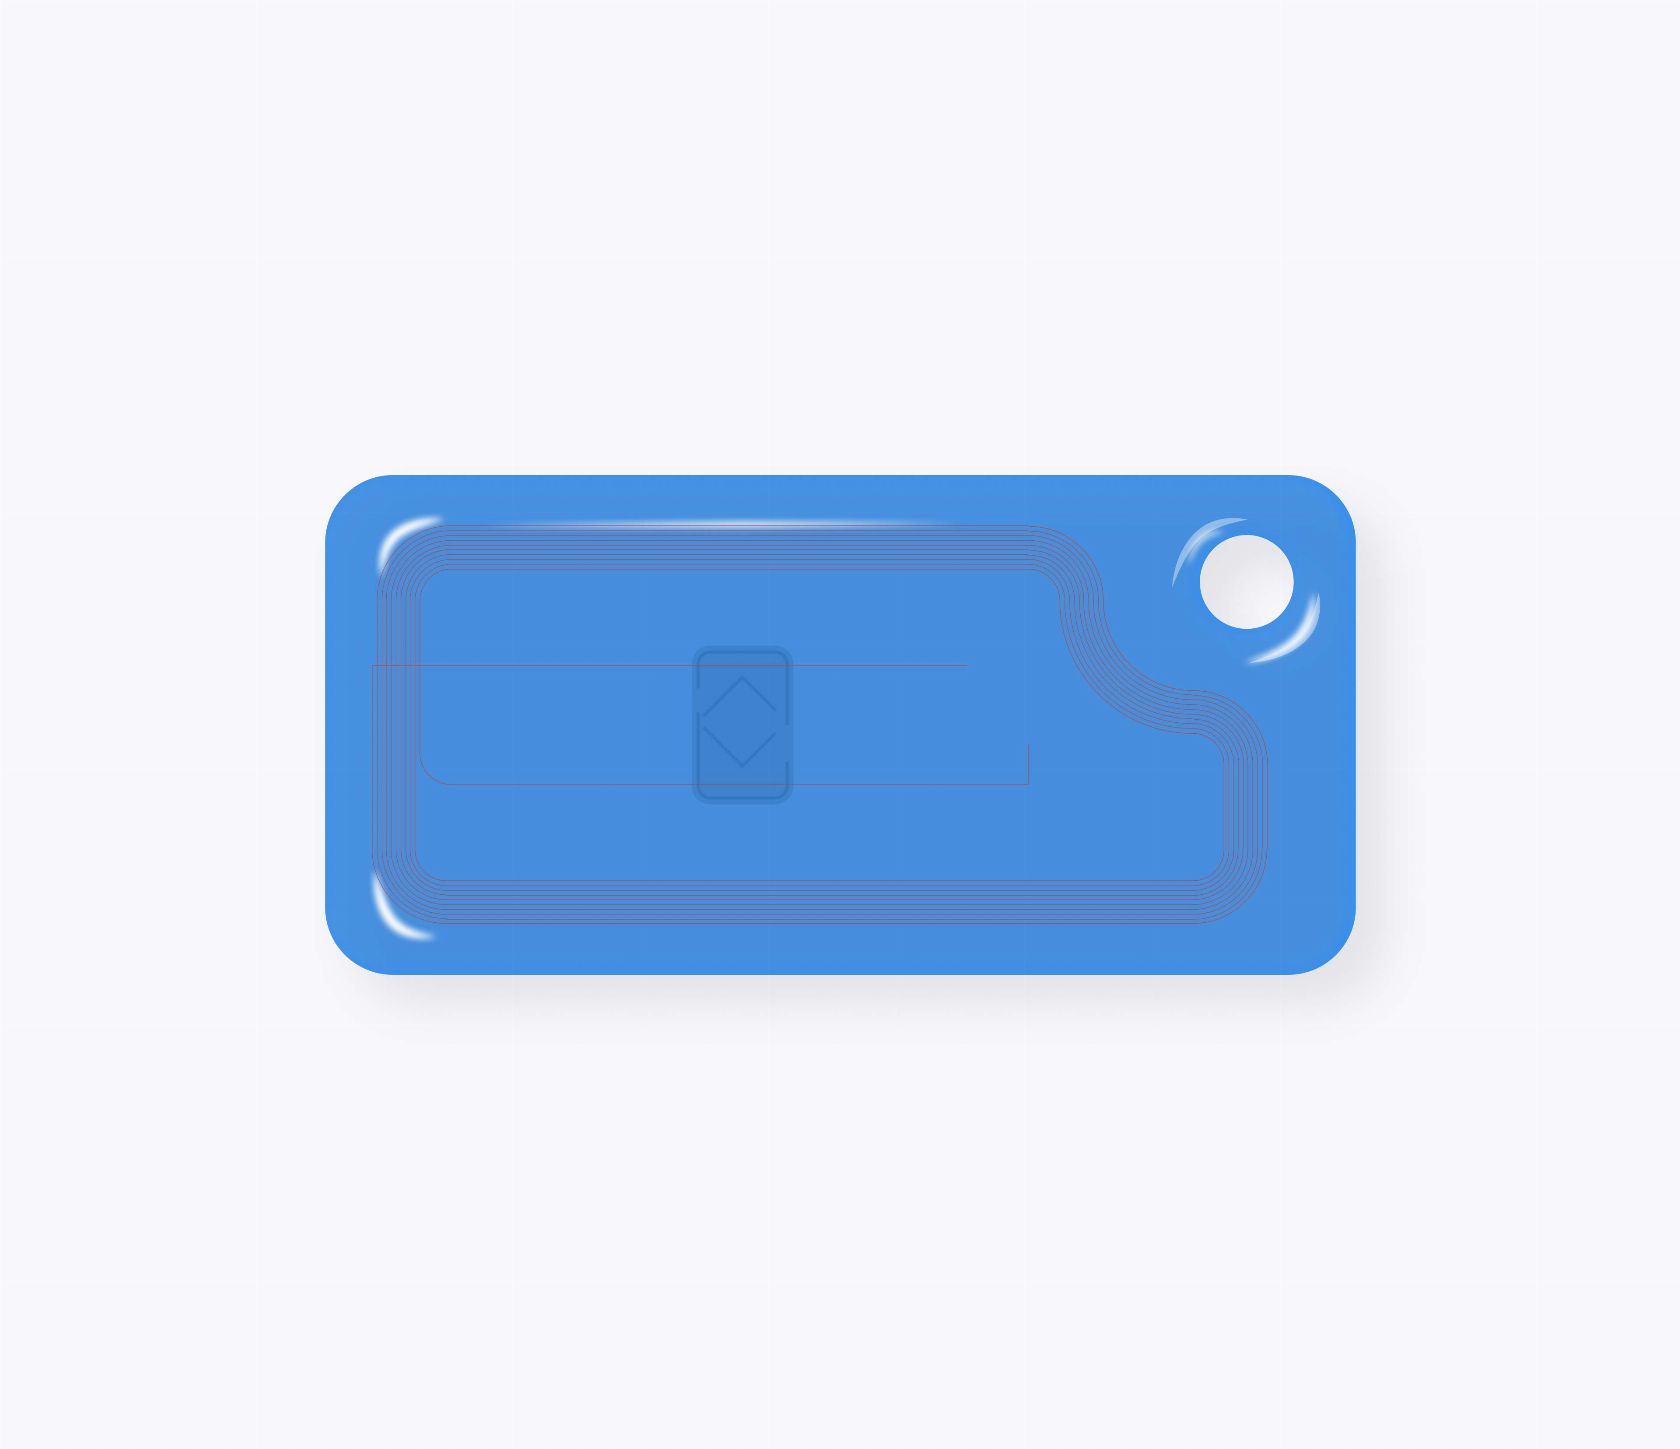 RFID-брелок NEOKEY® Air CARAMEL® (прямоугольной формы) MIFARE 1k 4b nUID прозрачный синий RFID-брелок NEOKEY® Caramel (прямоугольной формы) NXP MIFARE 1k 4b nUID, синий